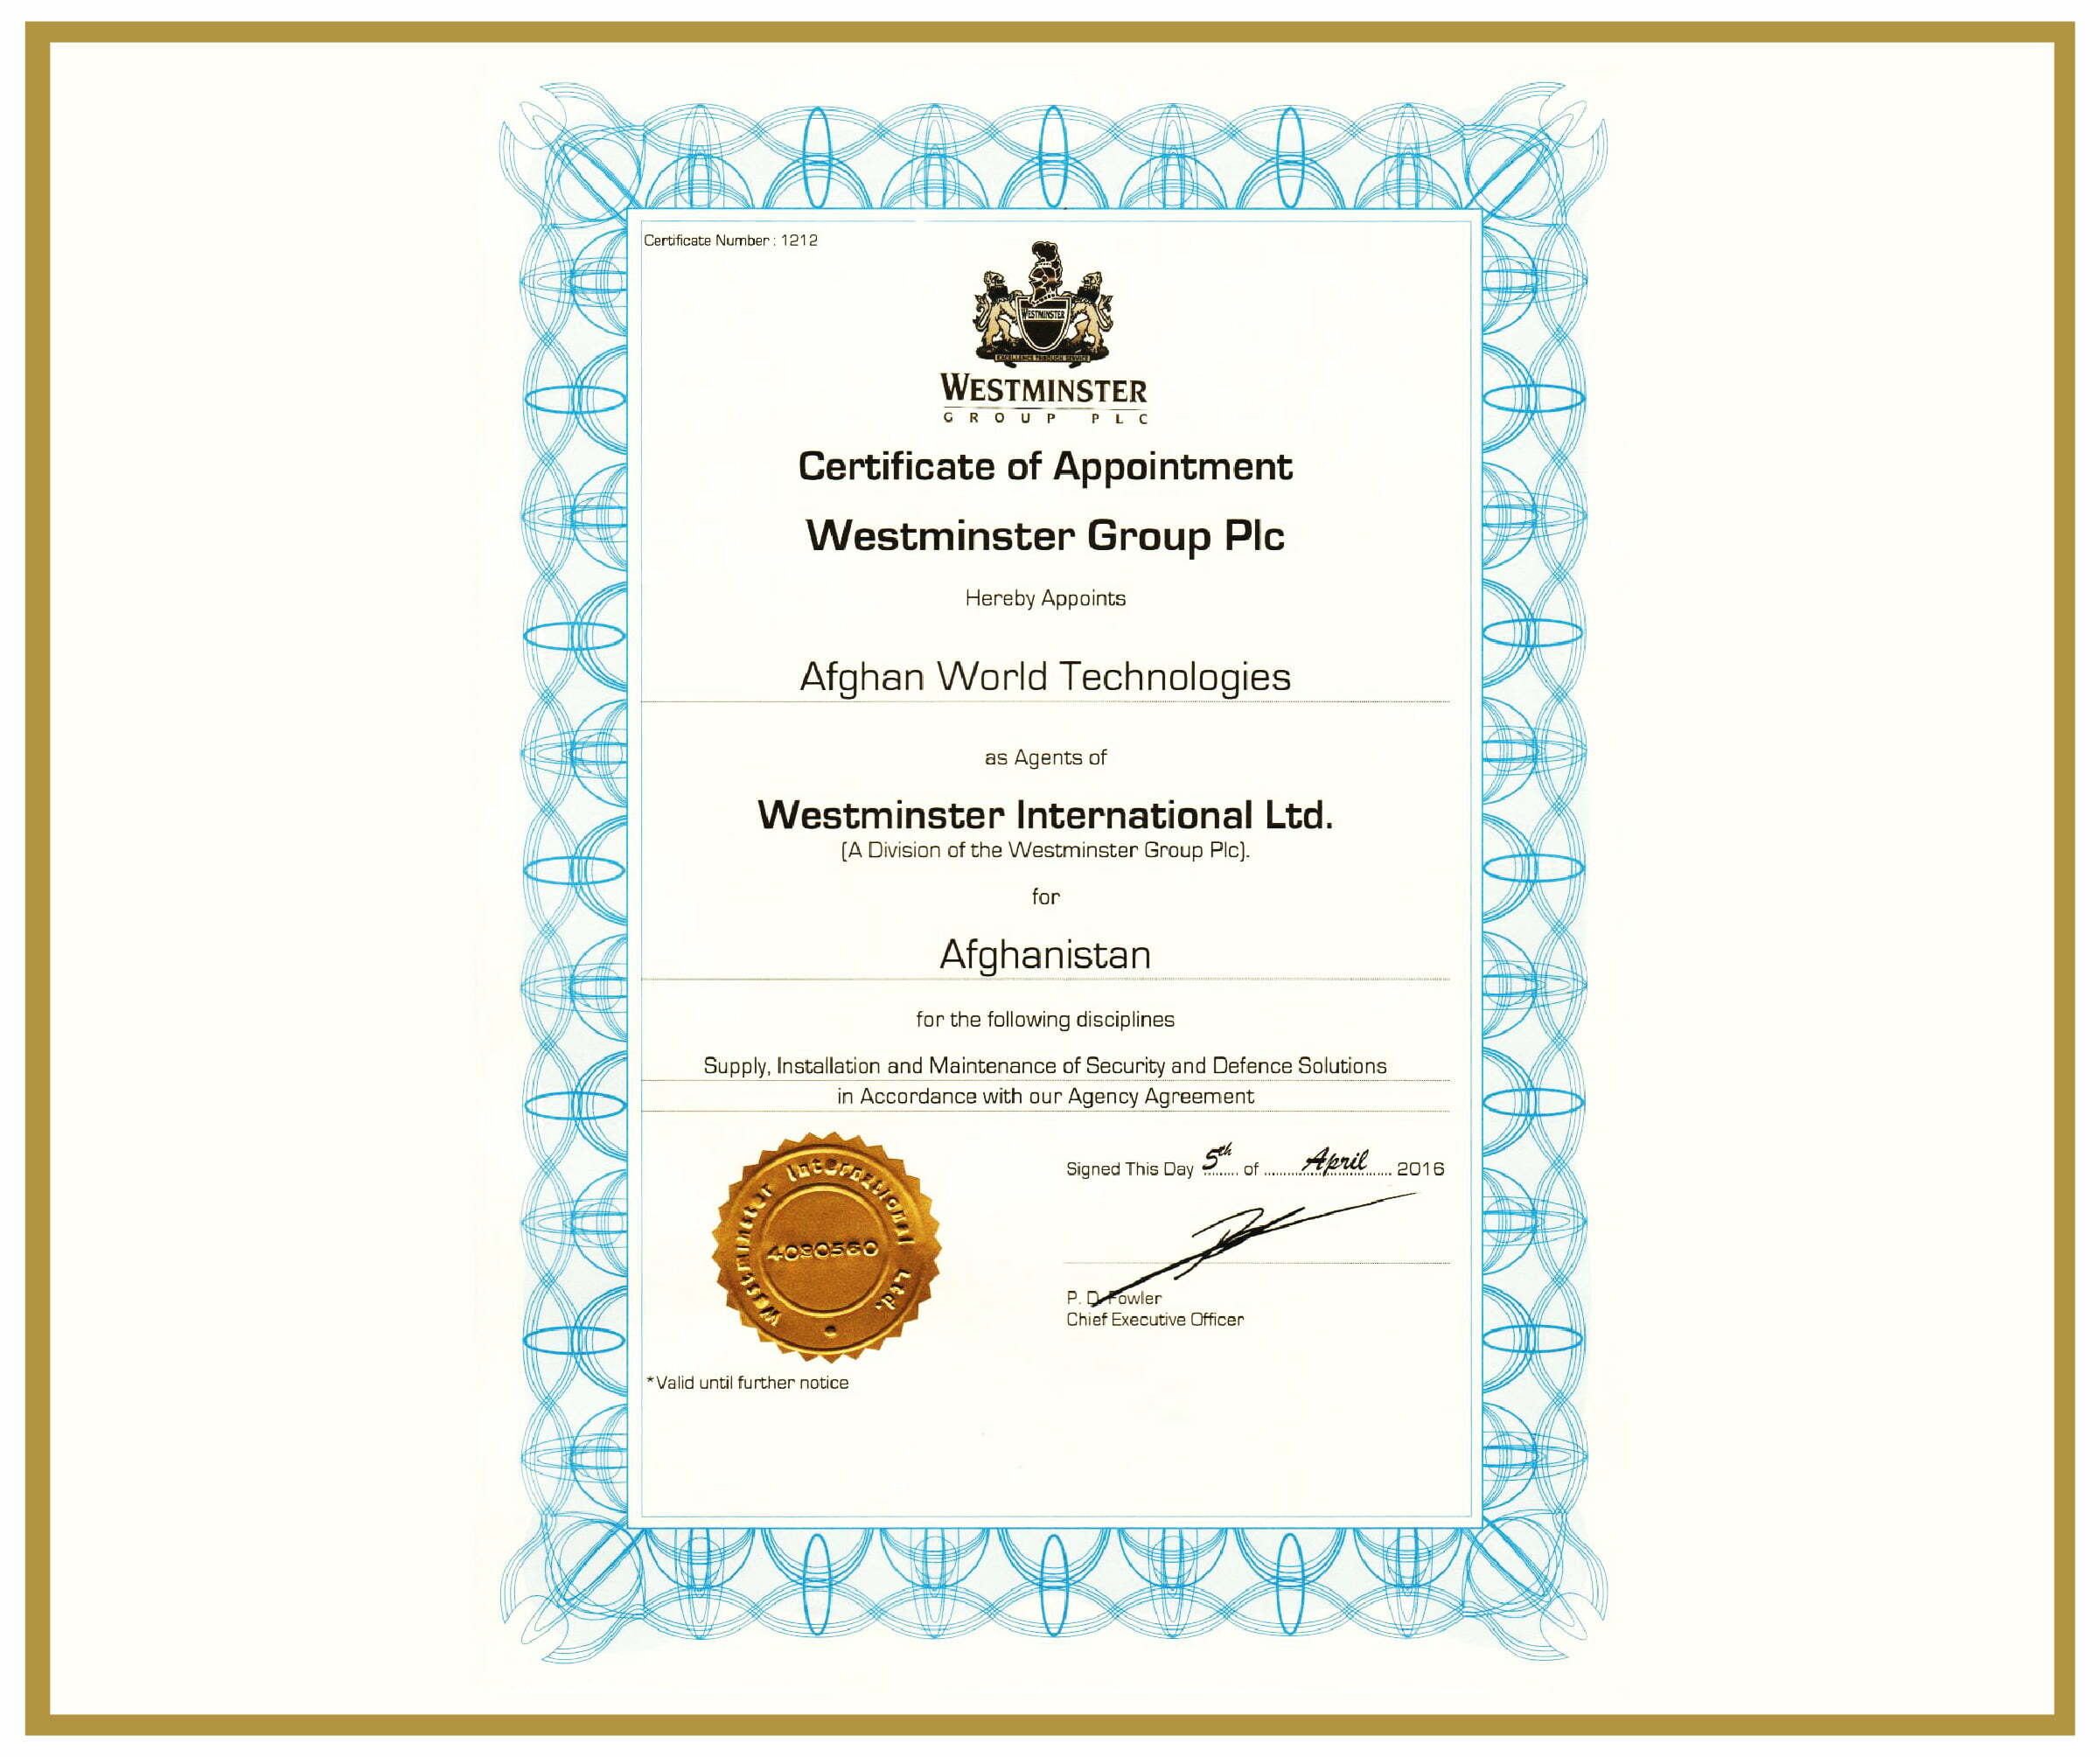 AWT-Afghan World Technologies-Certificates (2)